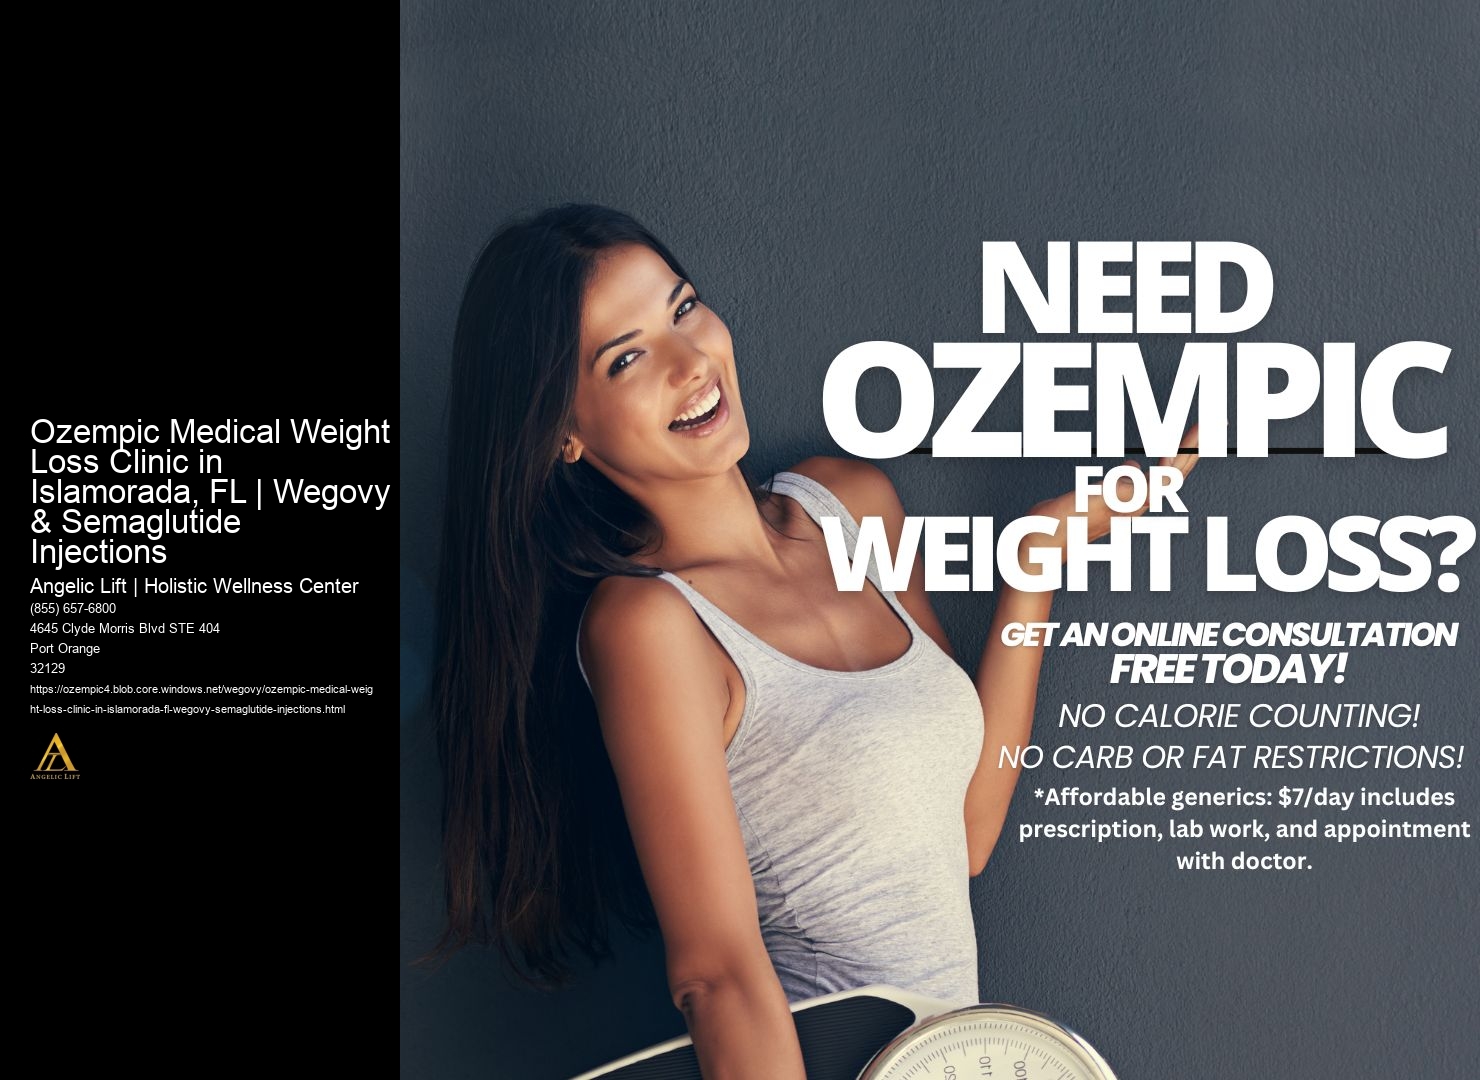 Ozempic Medical Weight Loss Clinic in Islamorada, FL | Wegovy & Semaglutide Injections